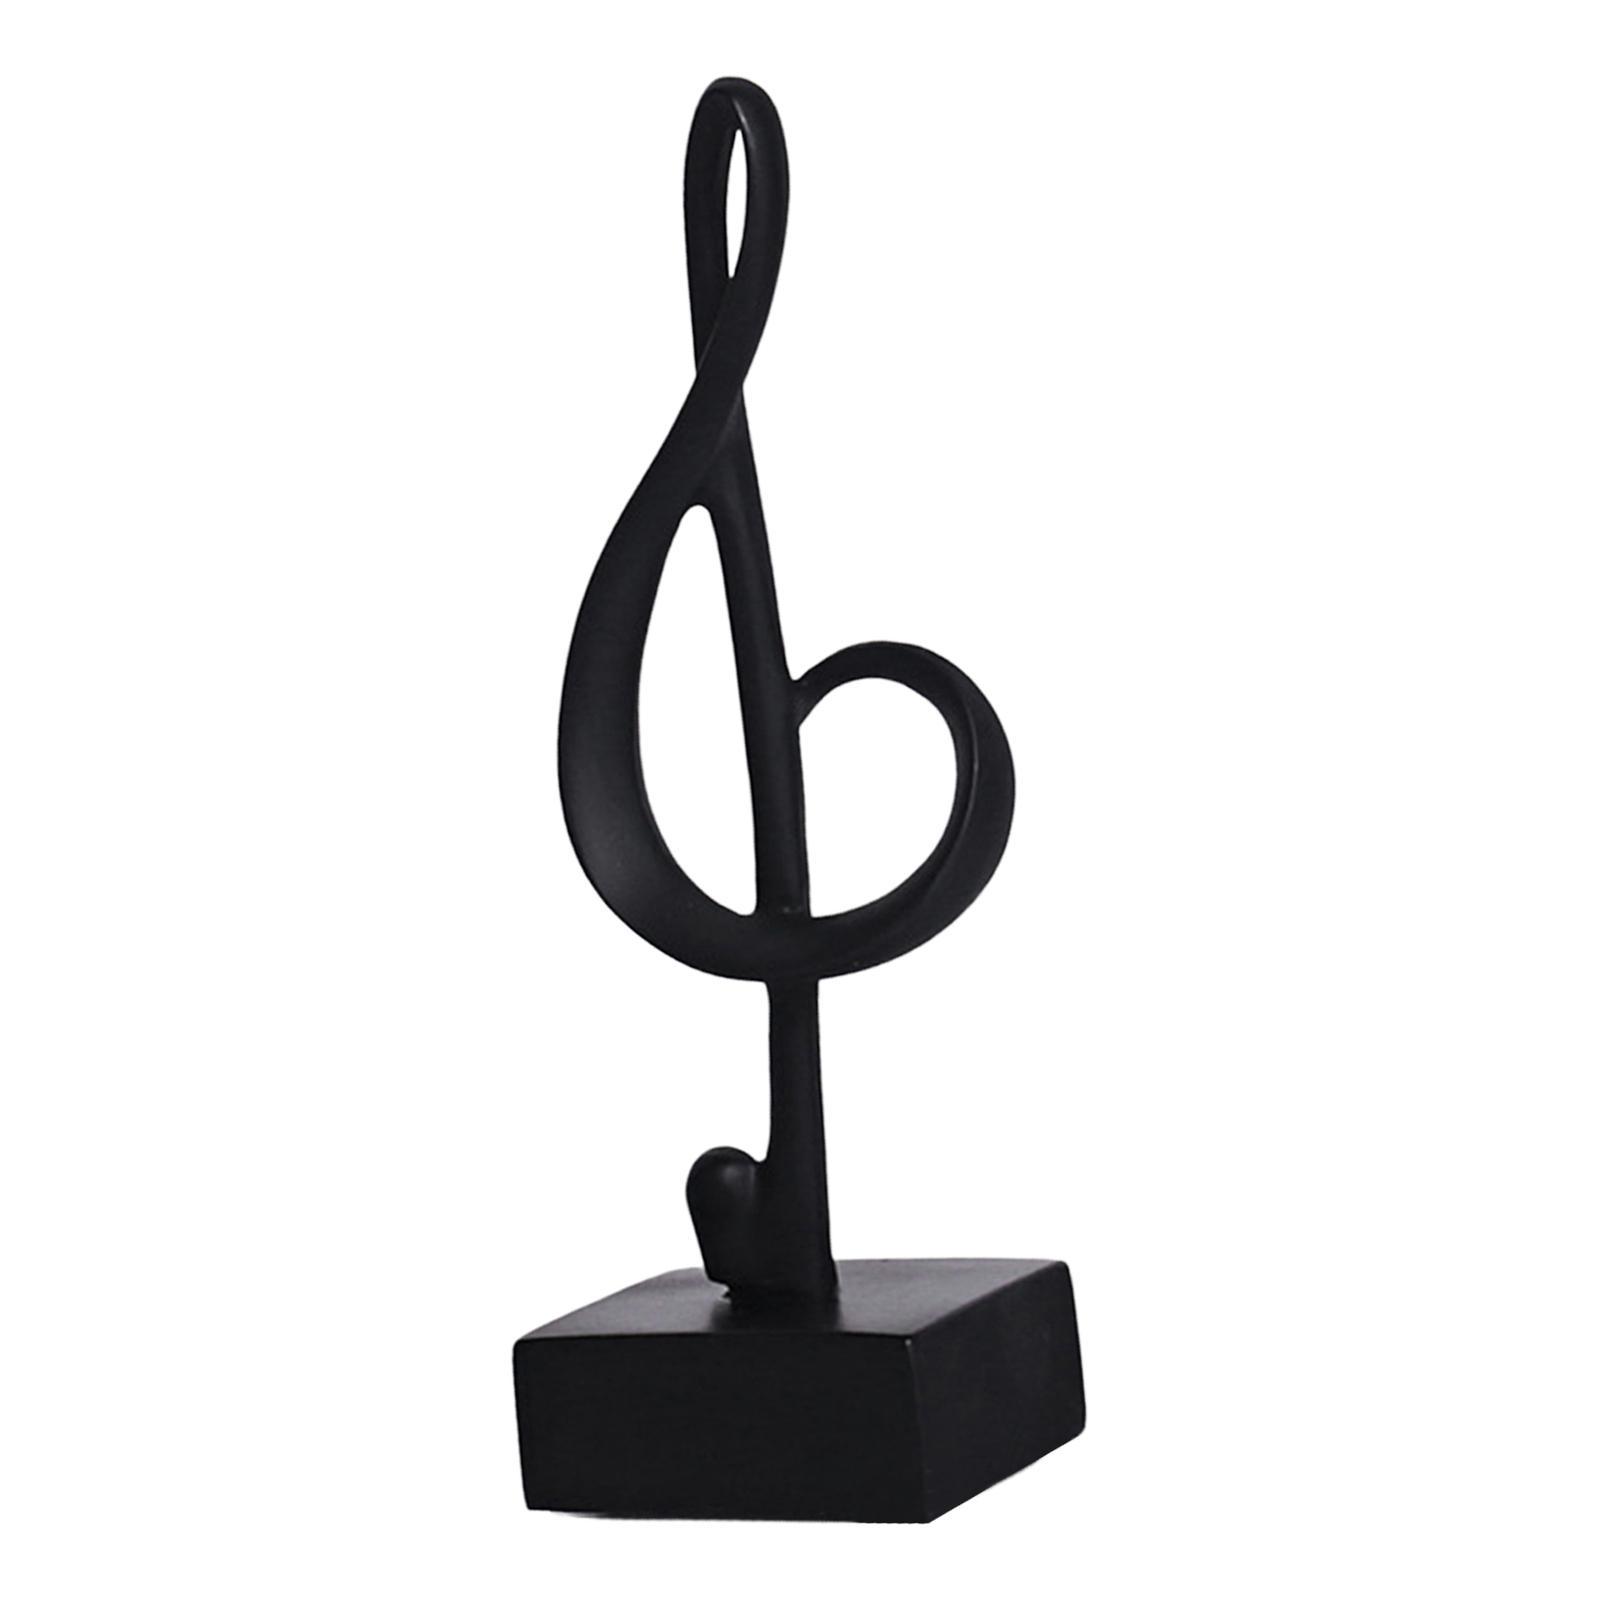 Decorative Music Note Figurine Resin Statue Craft Artwork for TV Cabinet